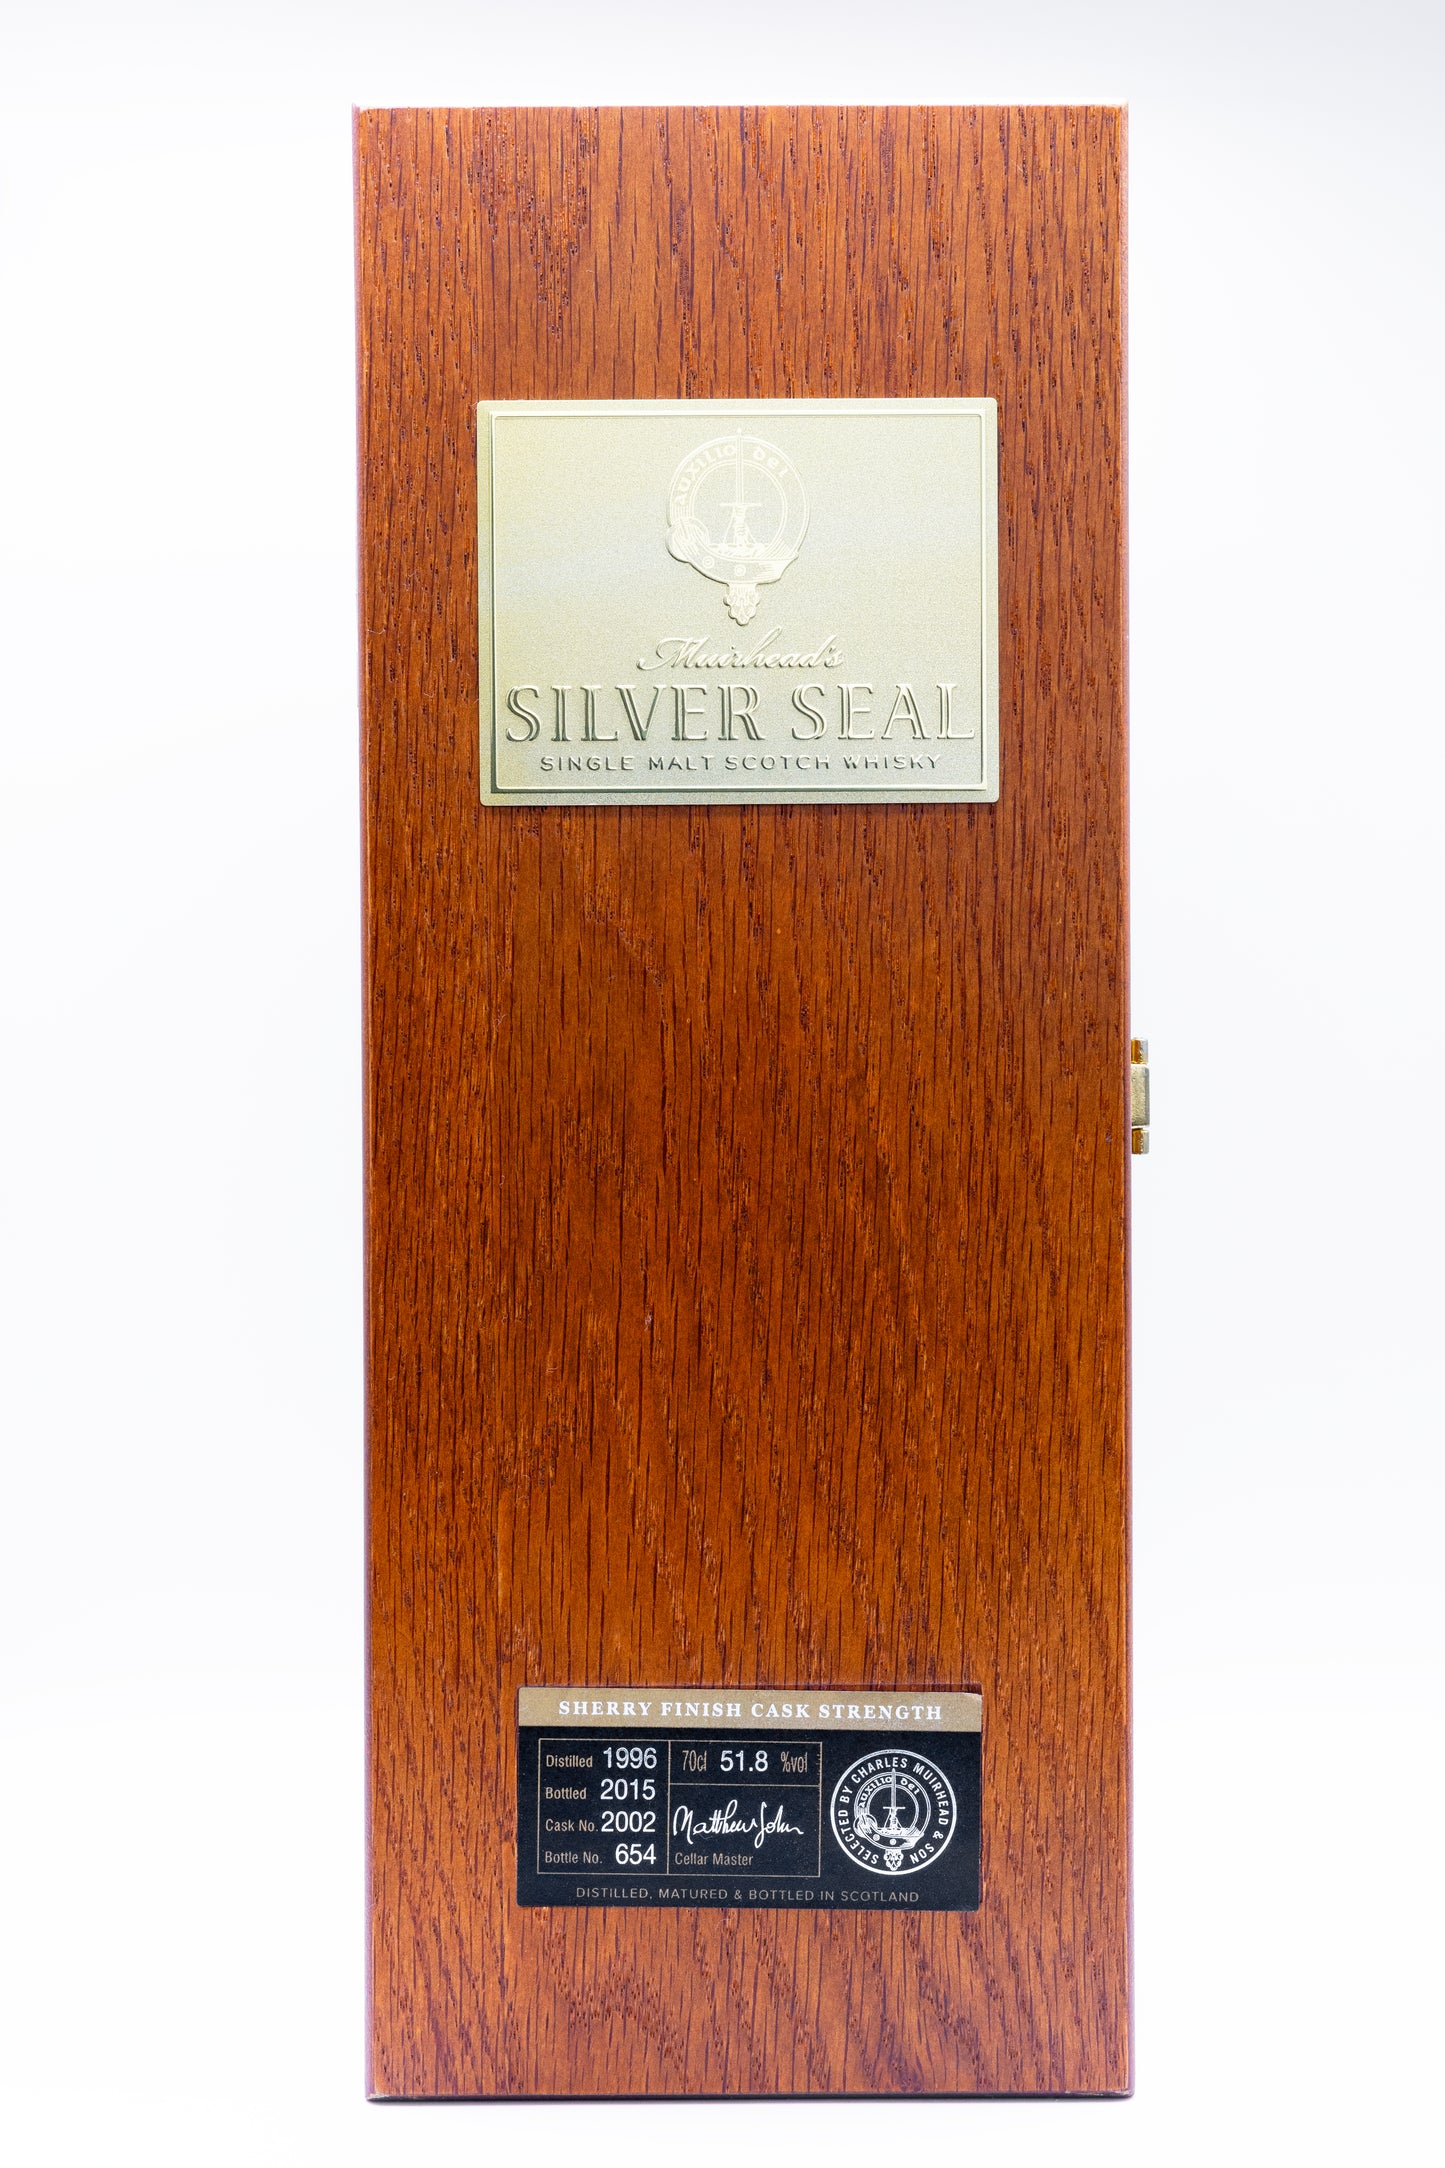 Glen Moray 1996 Muirhead's Silver Seal